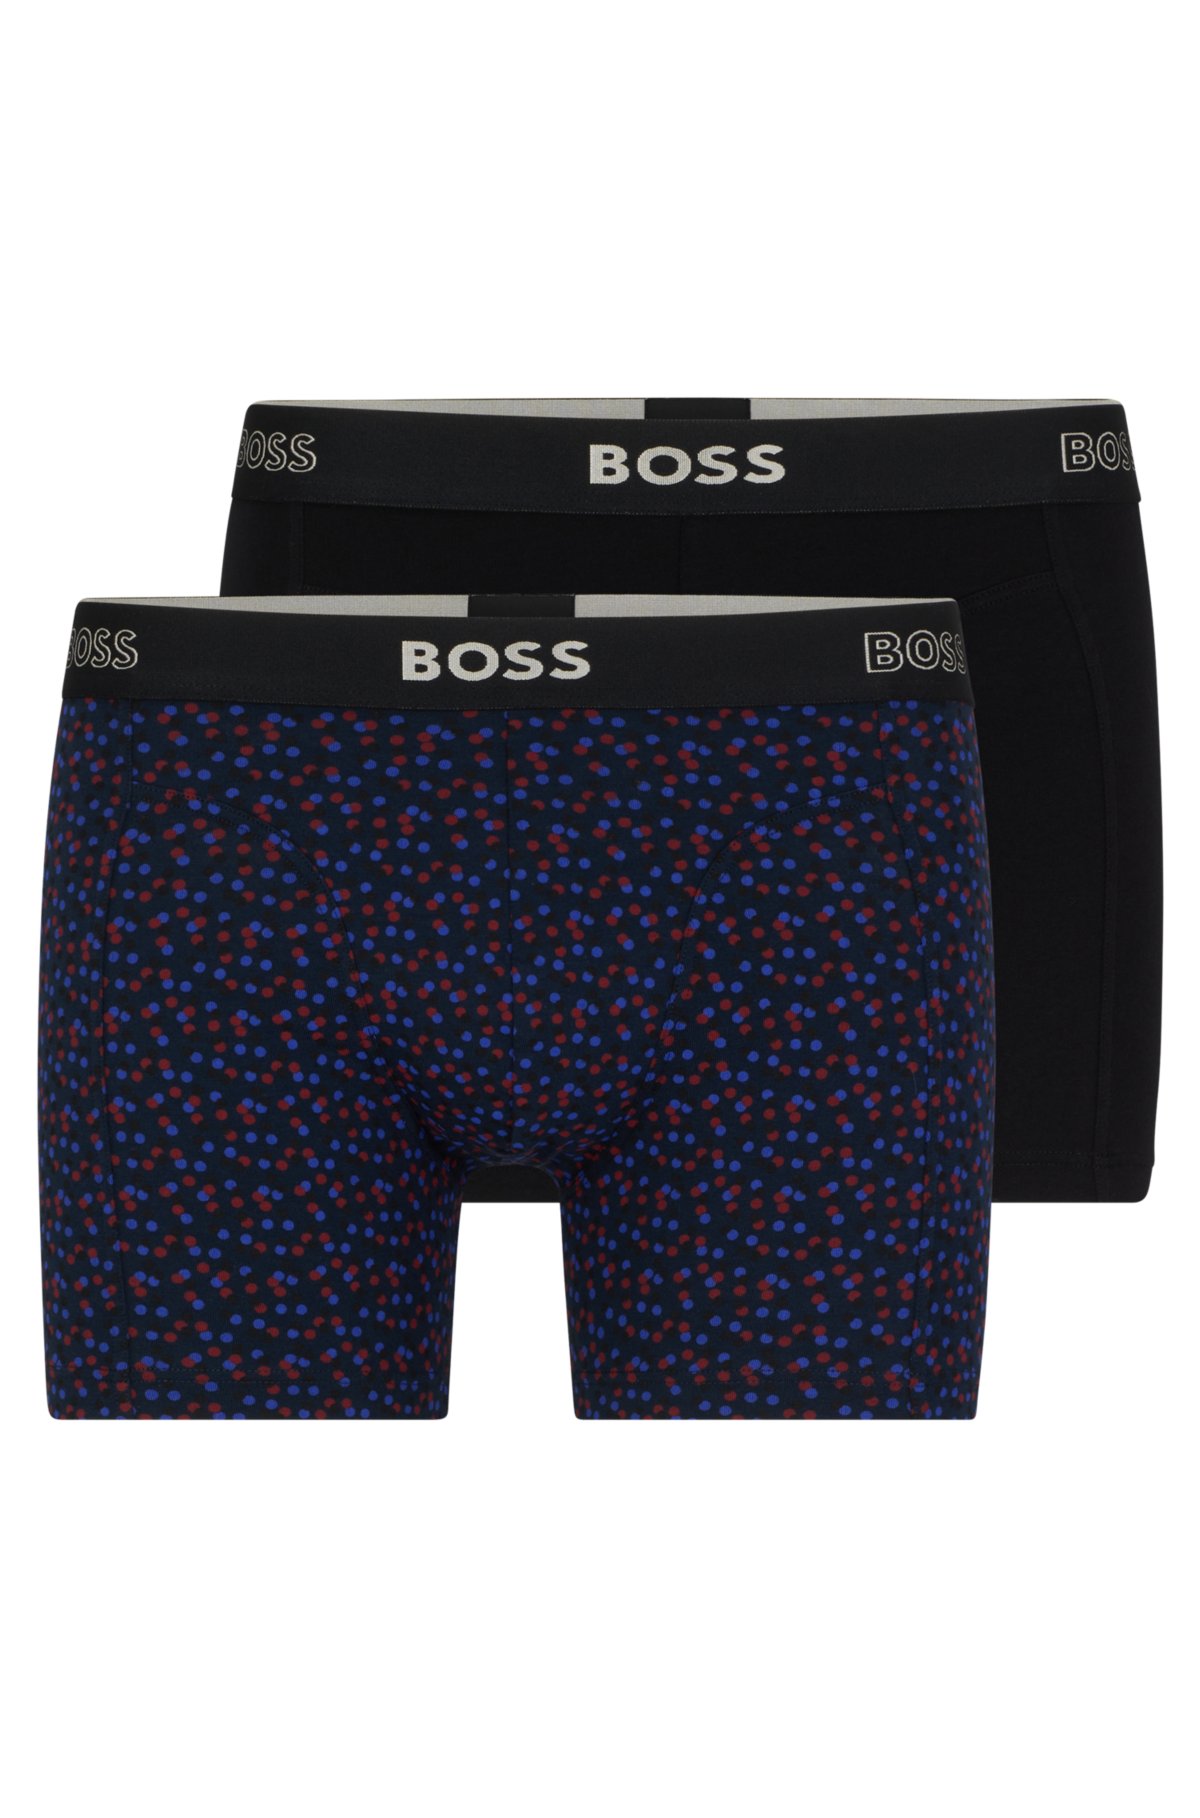 Men’s 2XL Pack of 3 Boxer Briefs~NWT~9”inseam~Multi-Color~EXCELLENT 44-46